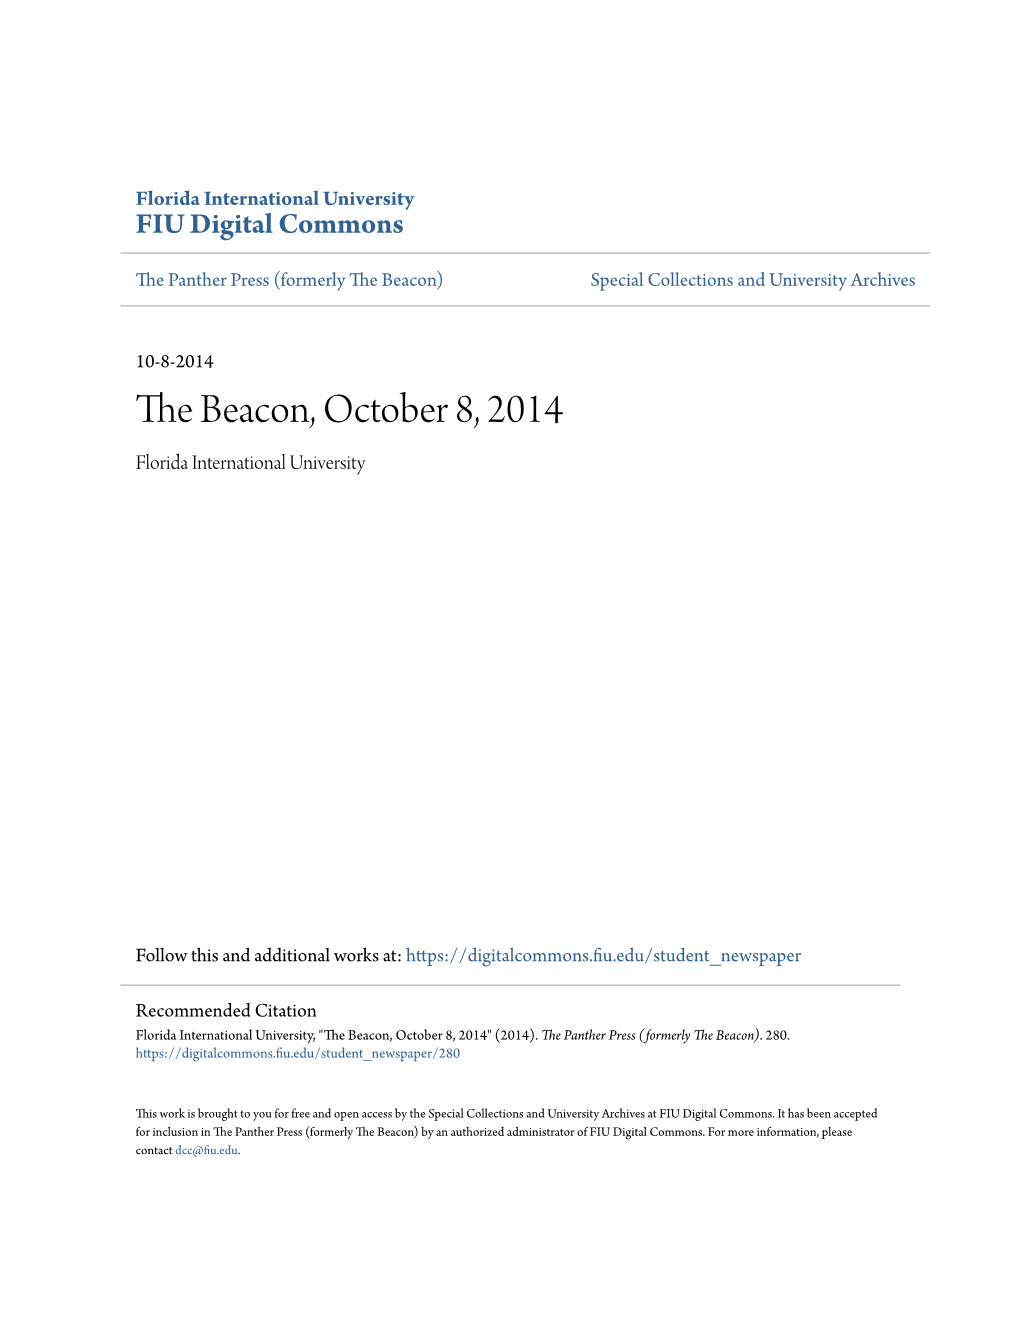 The Beacon, October 8, 2014 Florida International University